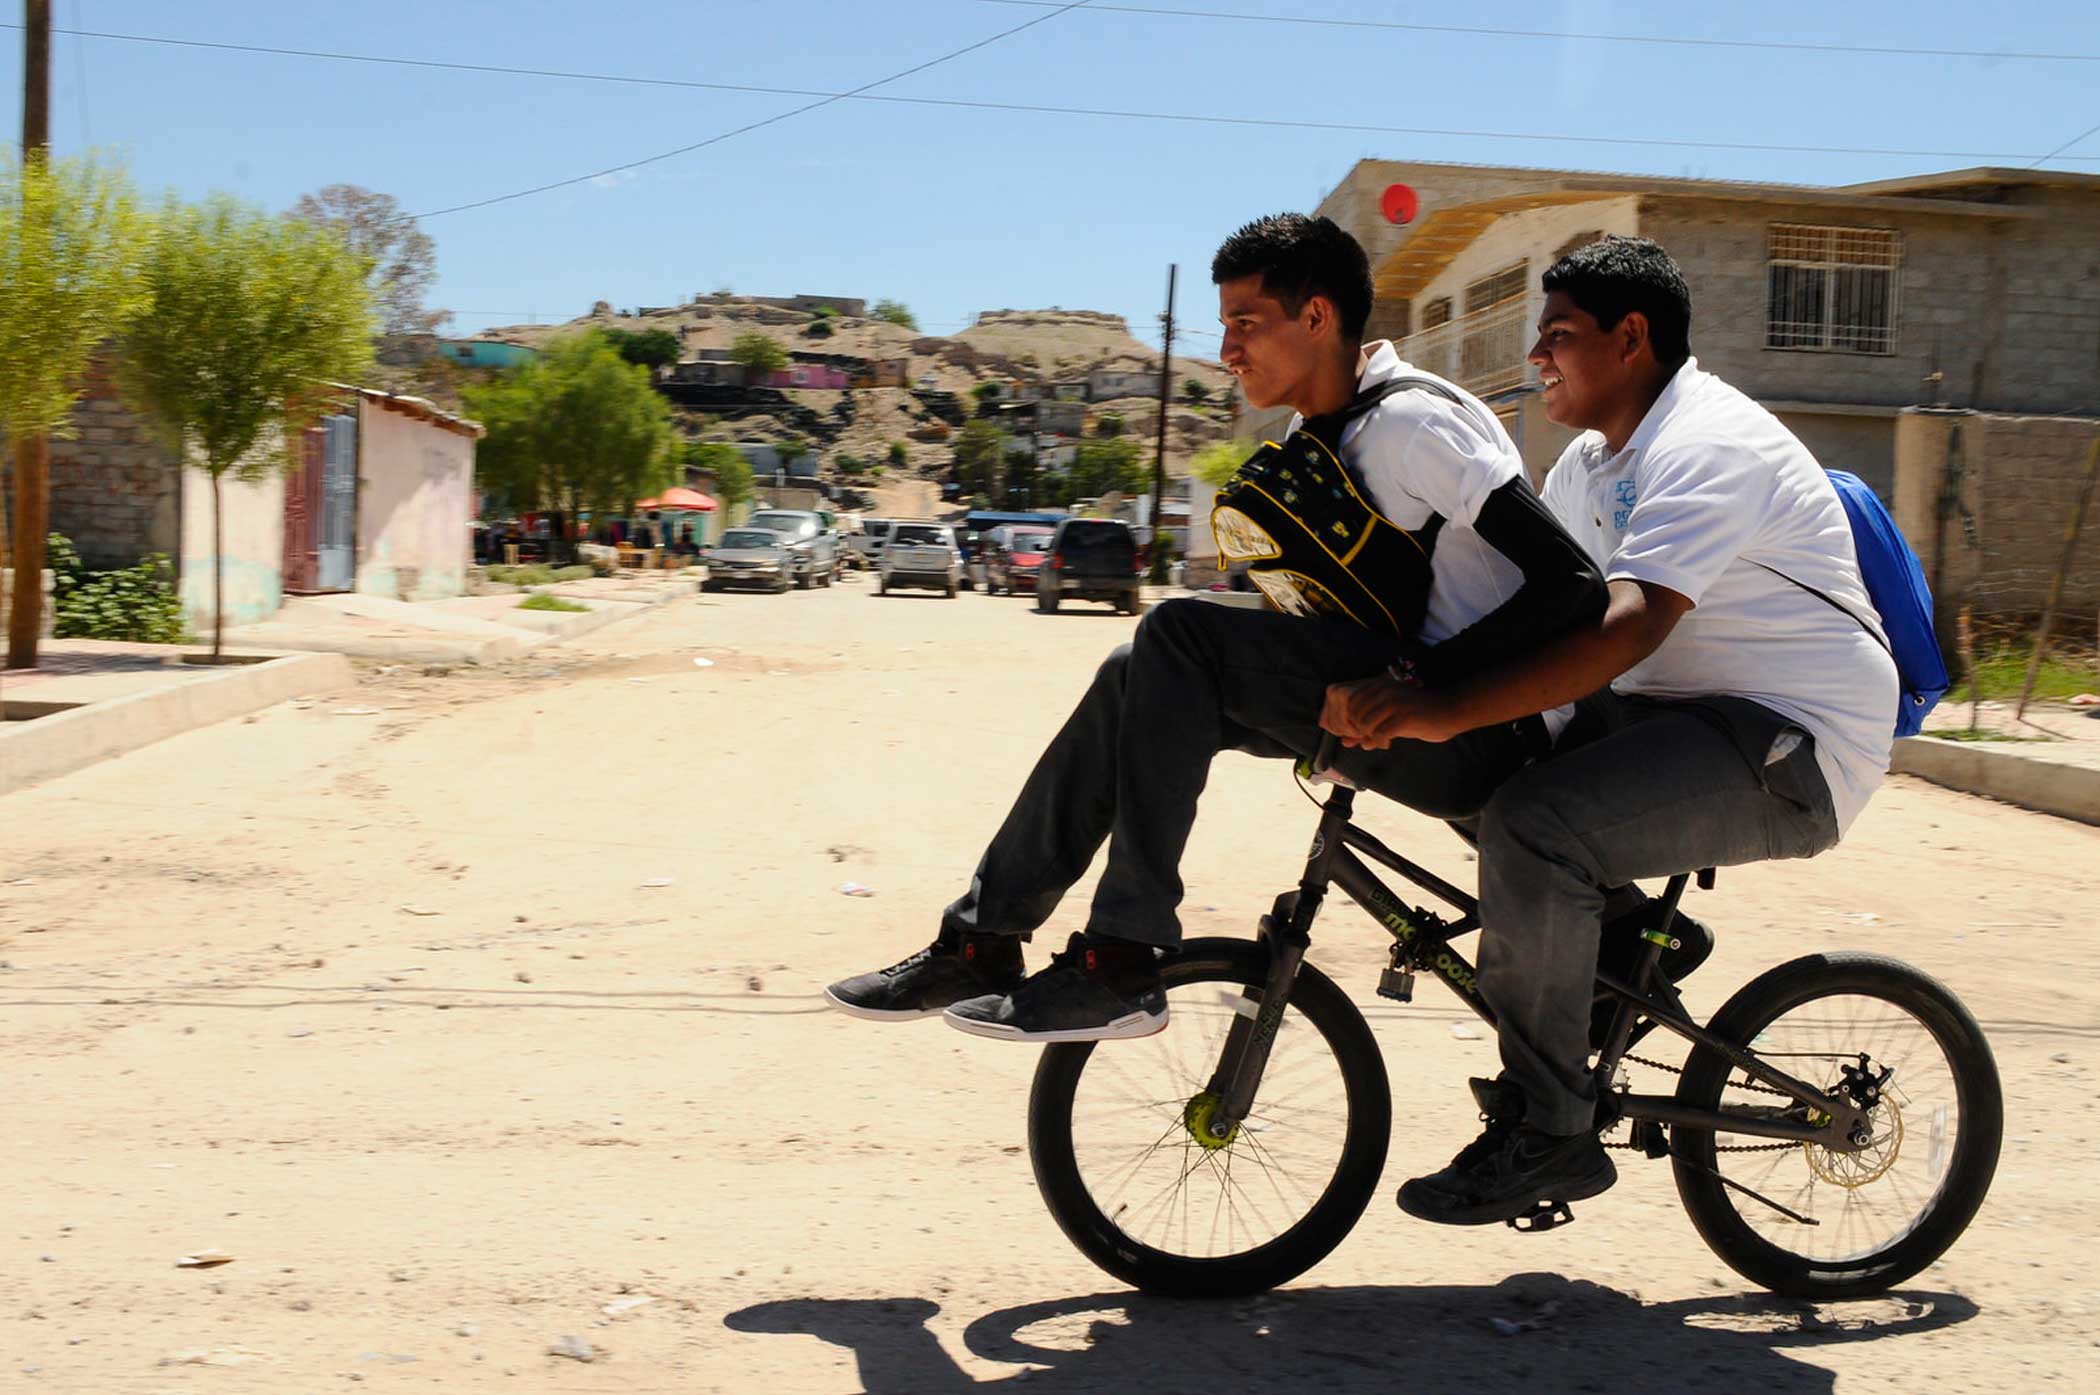 Students return from school on their bike in Juarez.